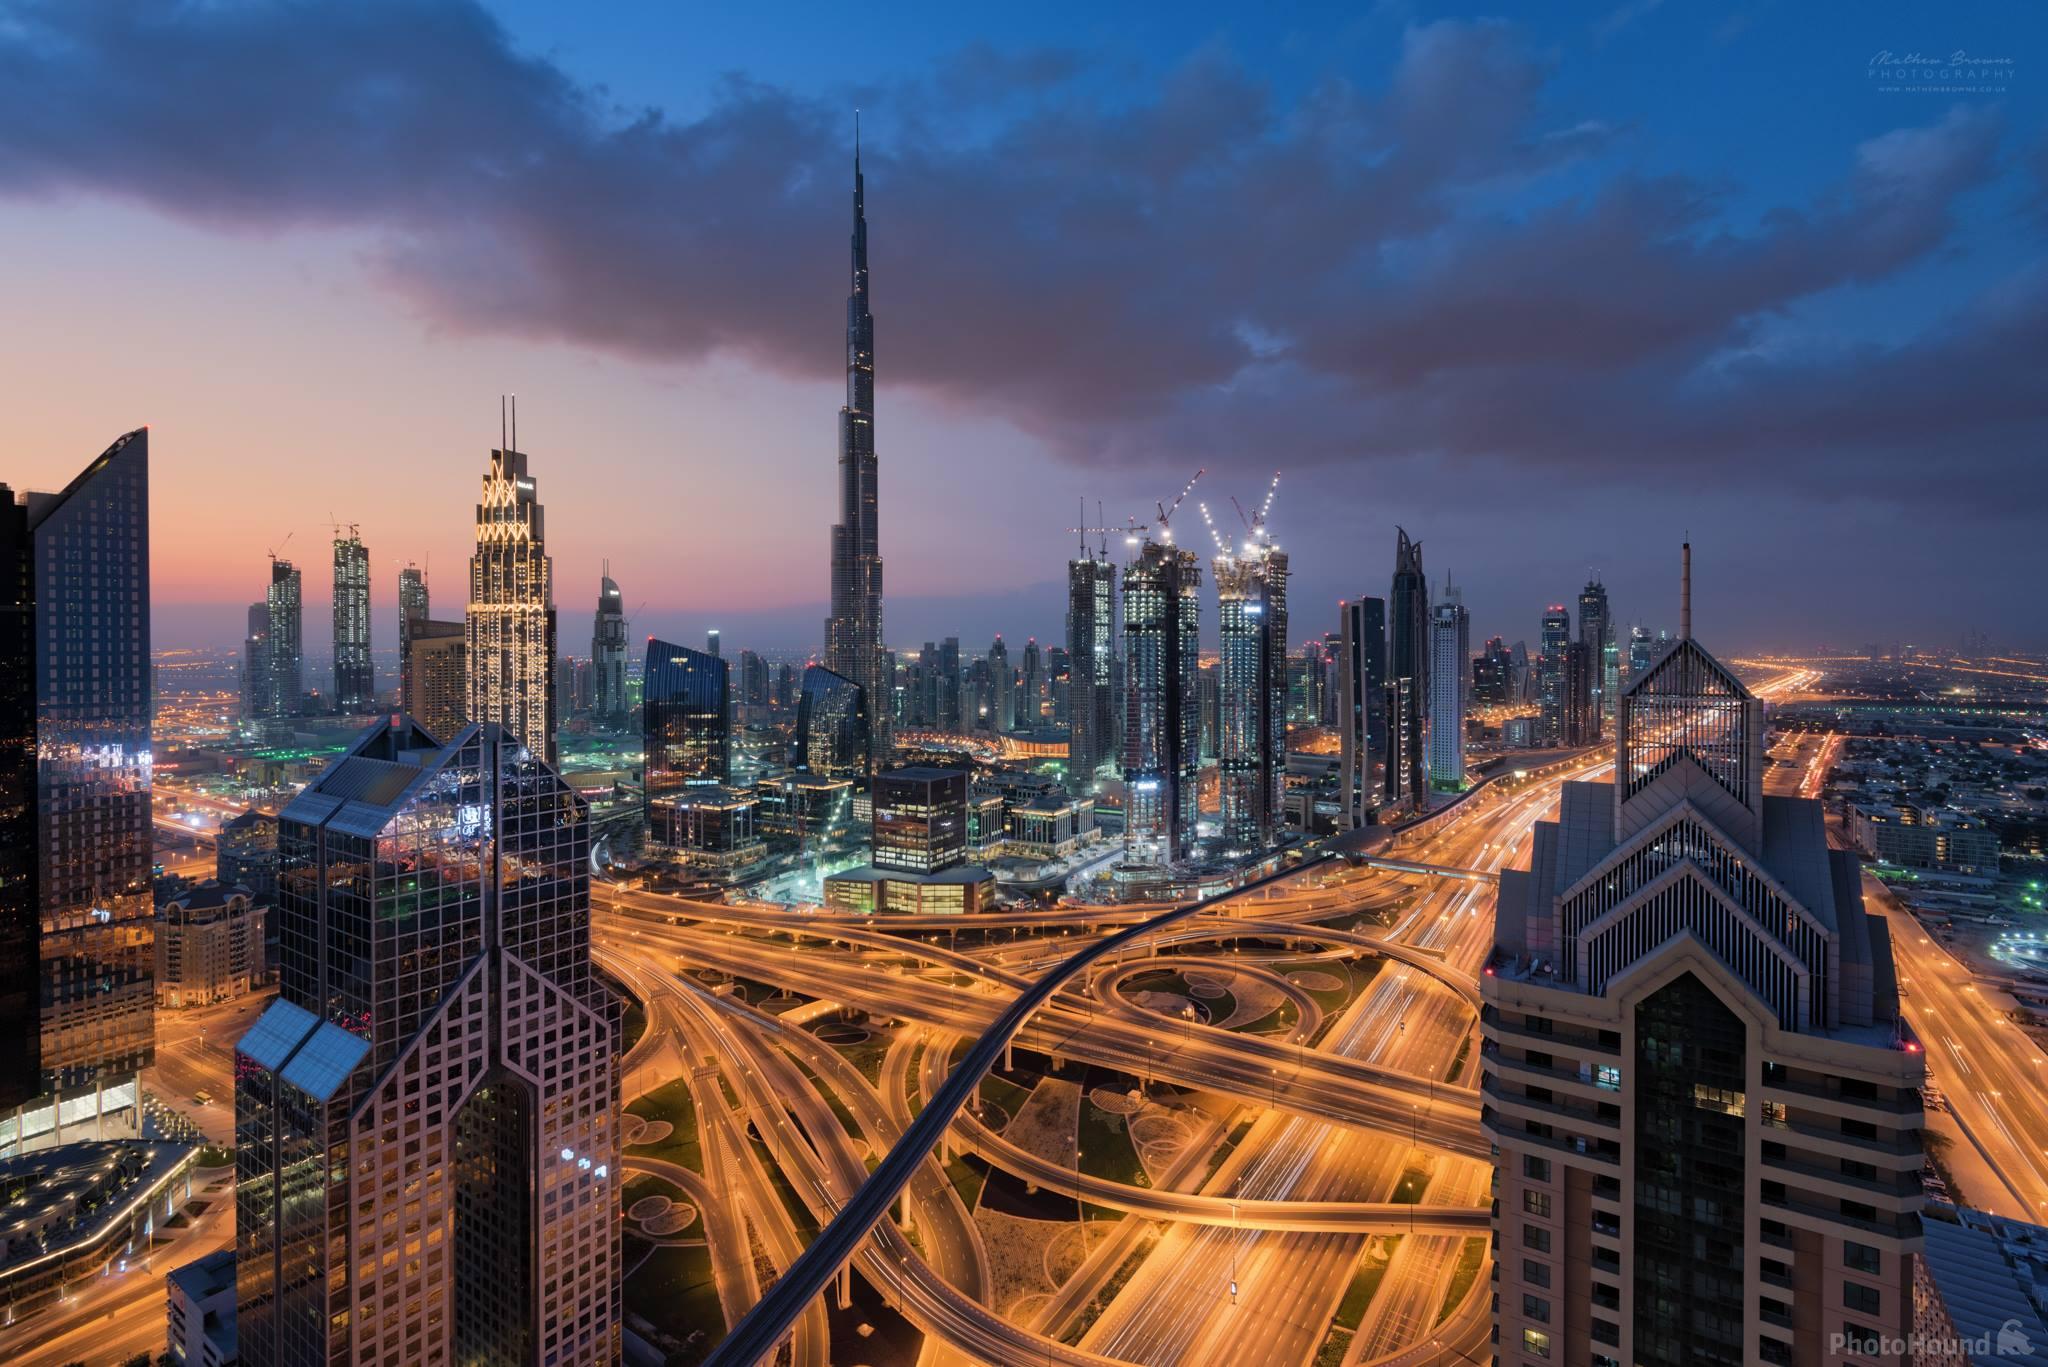 United Arab Emirates photo locations